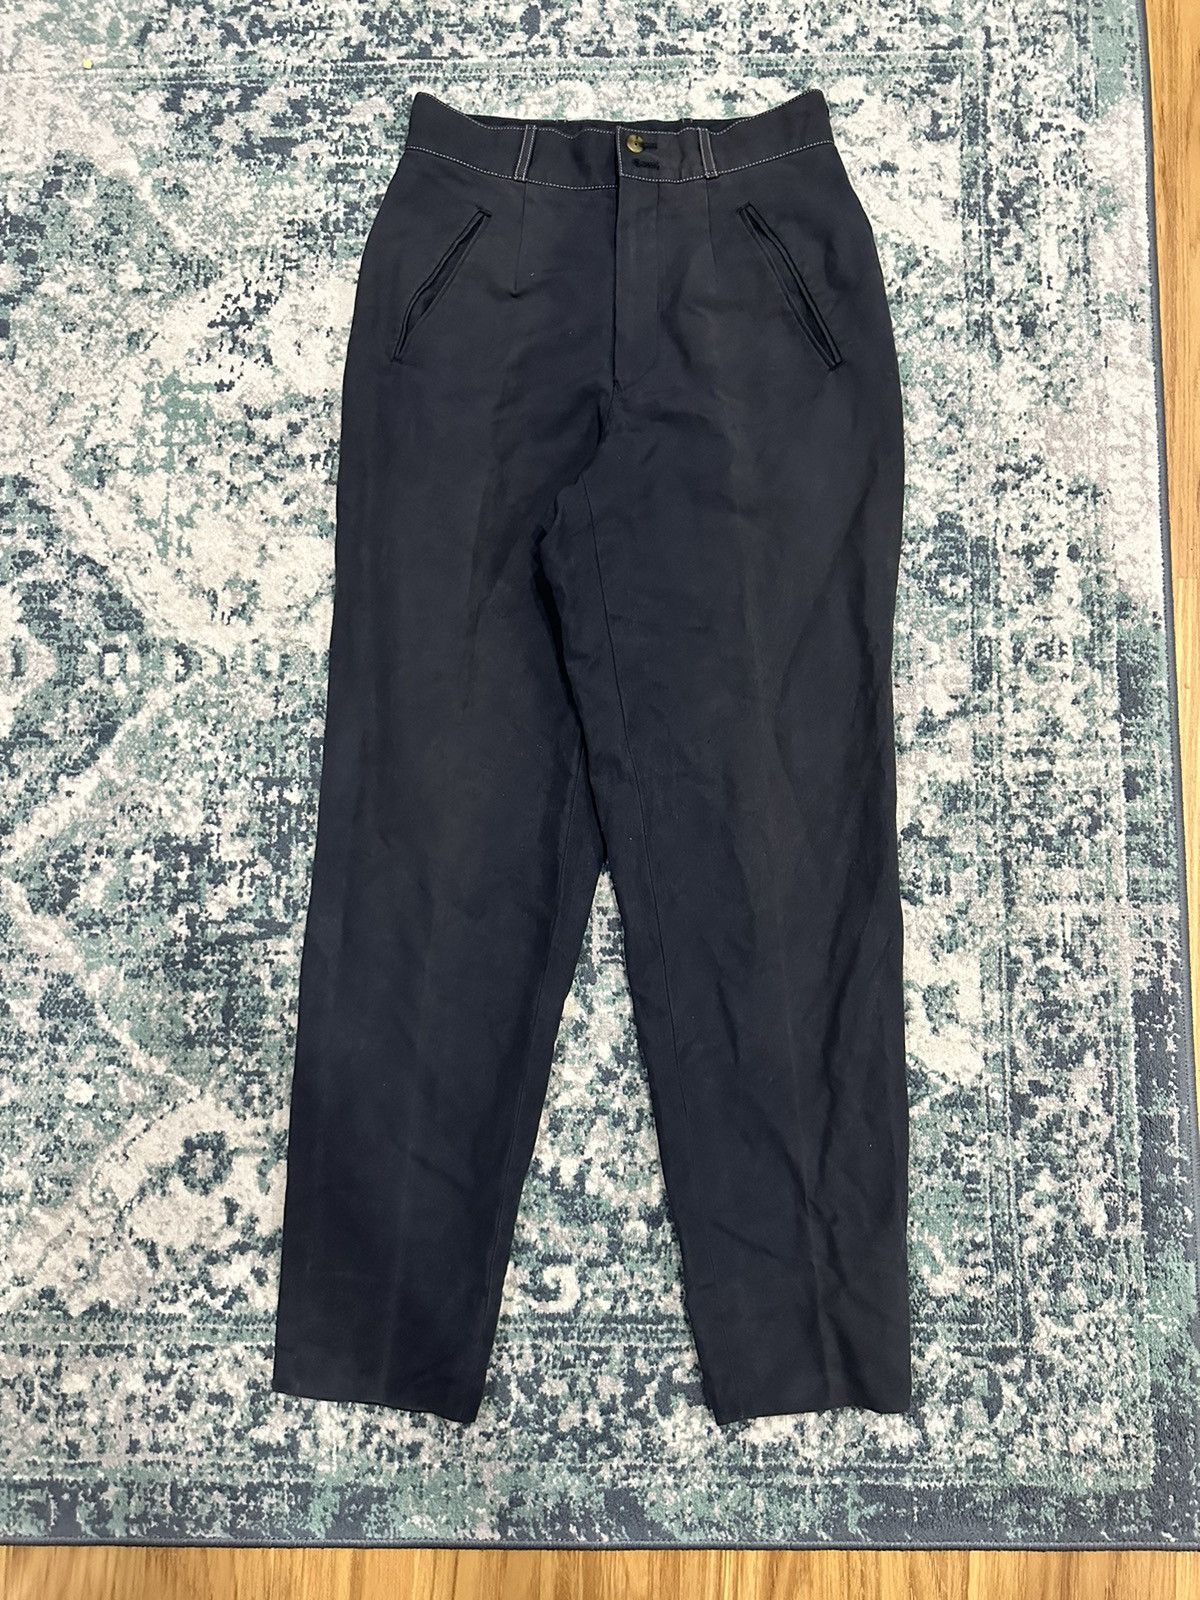 Jean Paul Gaultier Trousers Black Faded Pant - 3